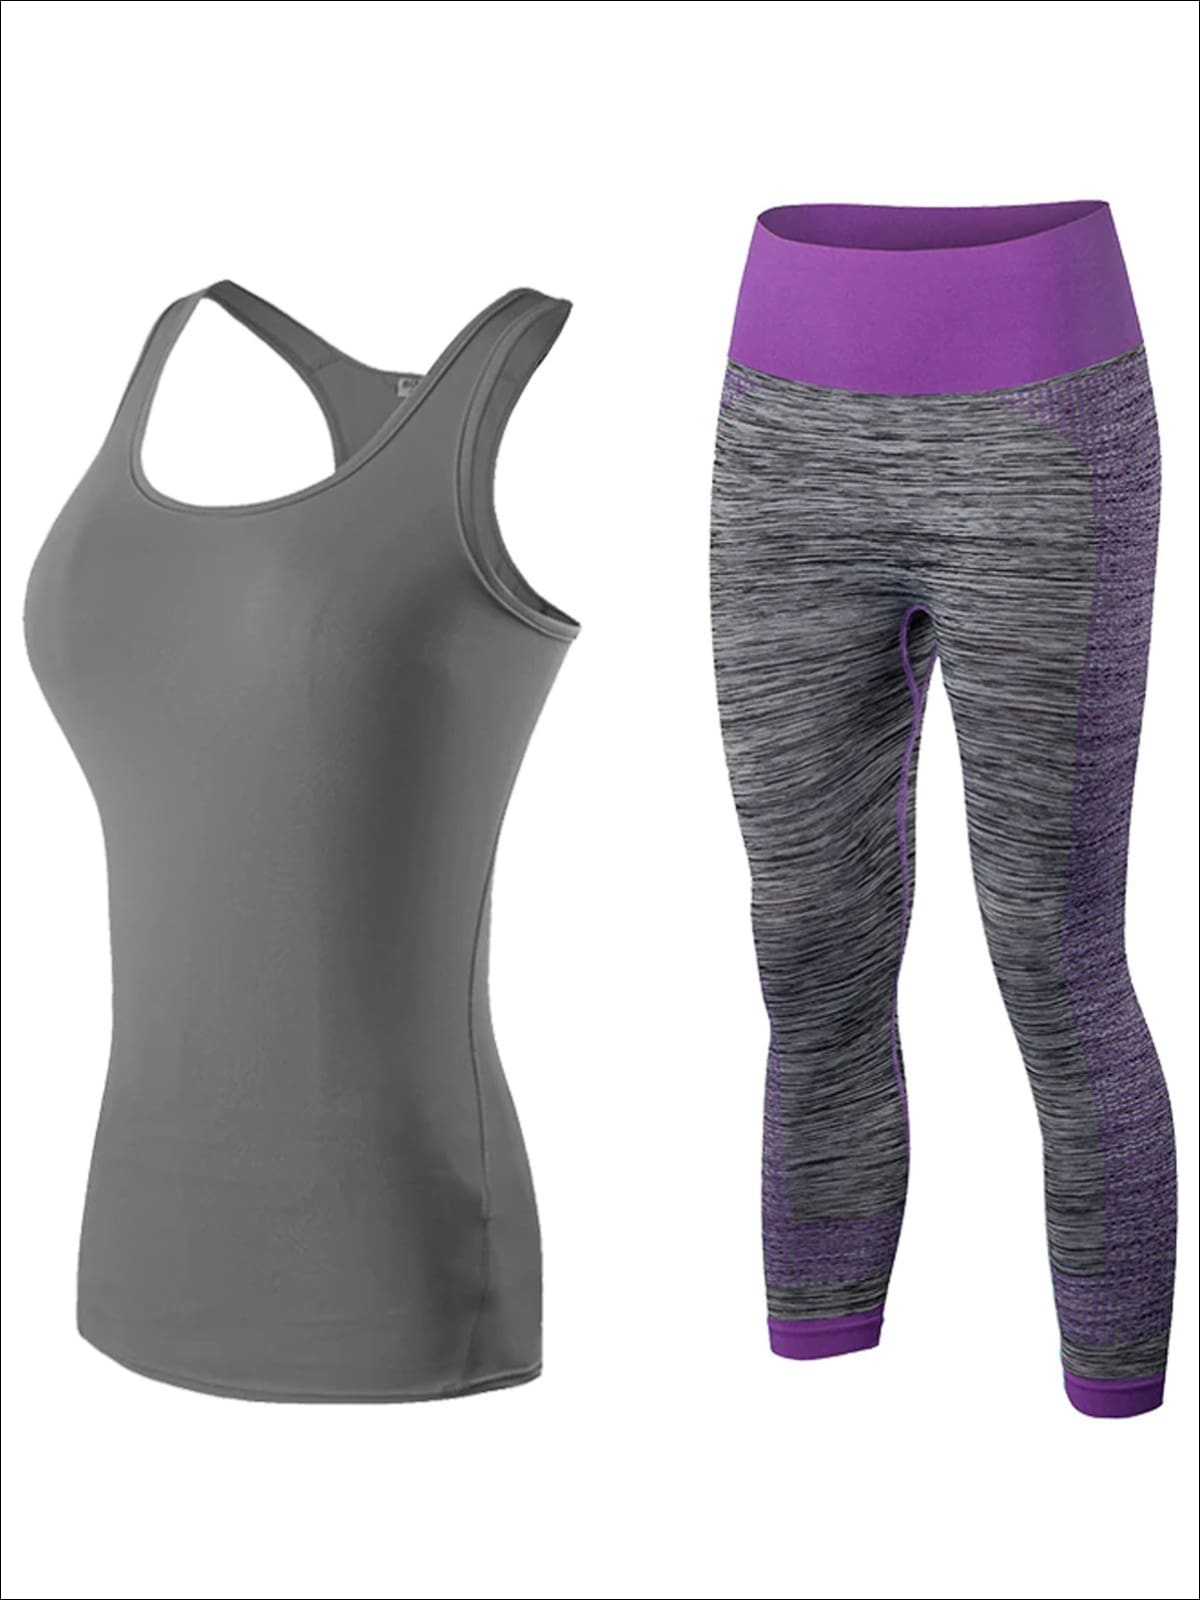 Womens Racerback Top & Marled Capri Leggings Set - Grey/Purple / S - Womens Activewear